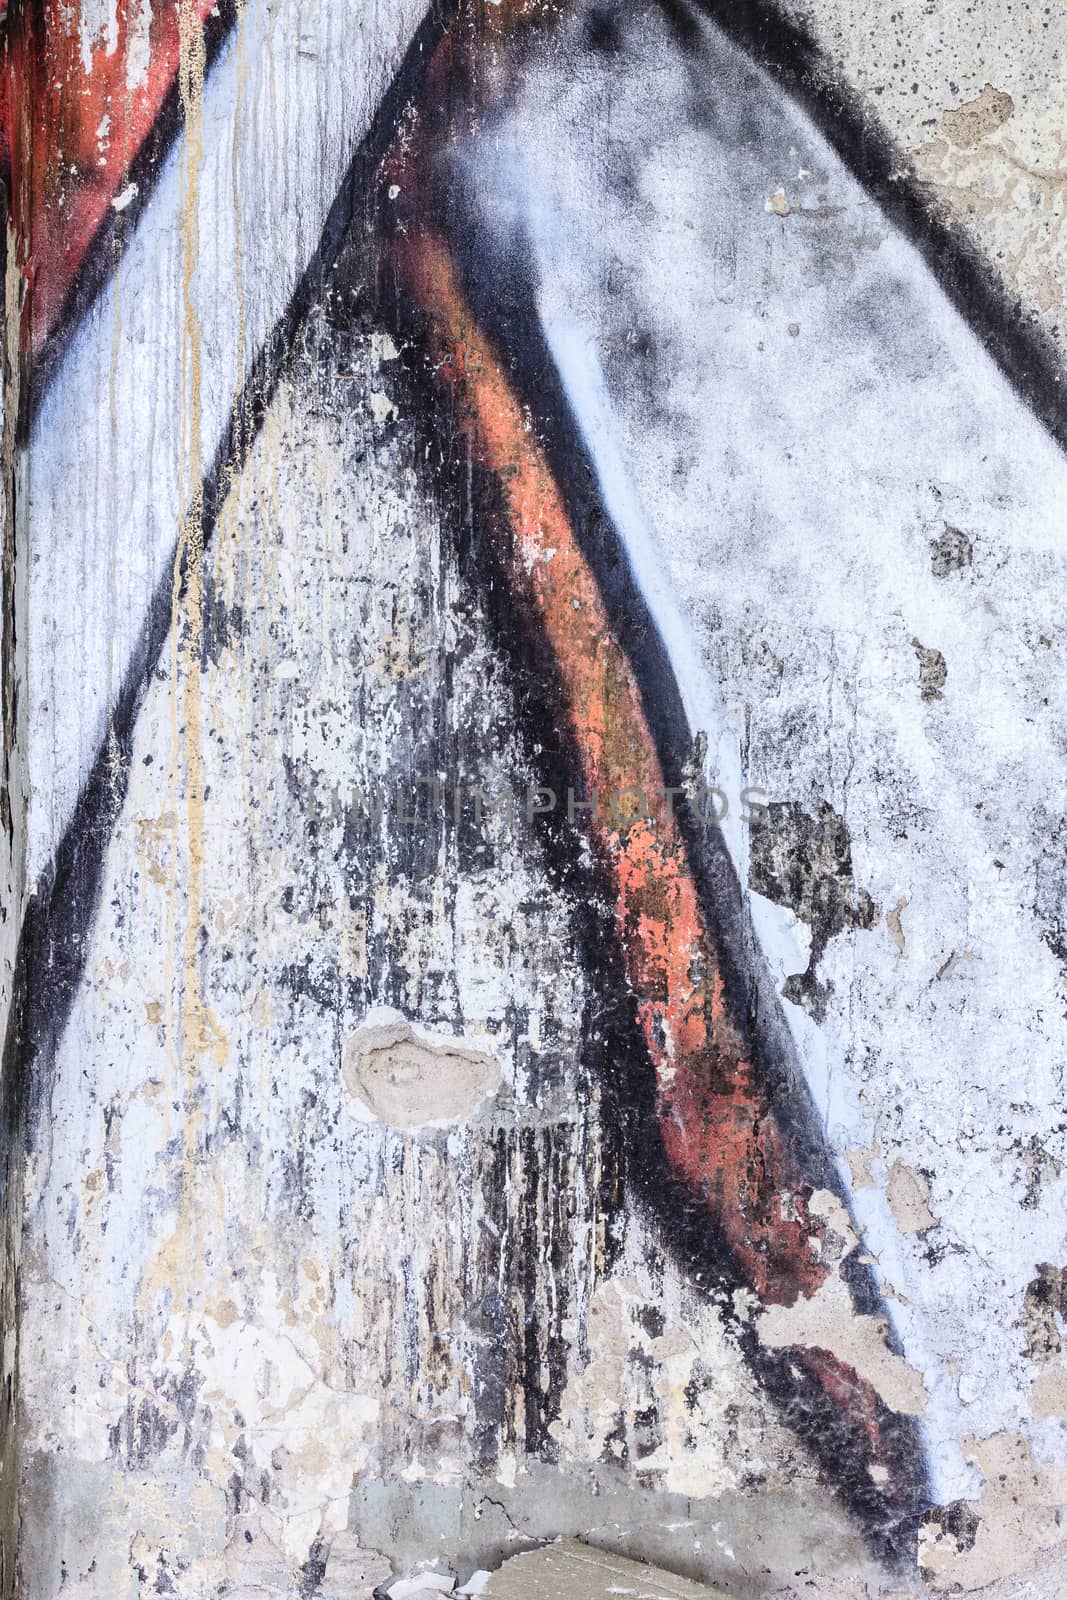 Gaffiti closeup in a damaged concrete wall